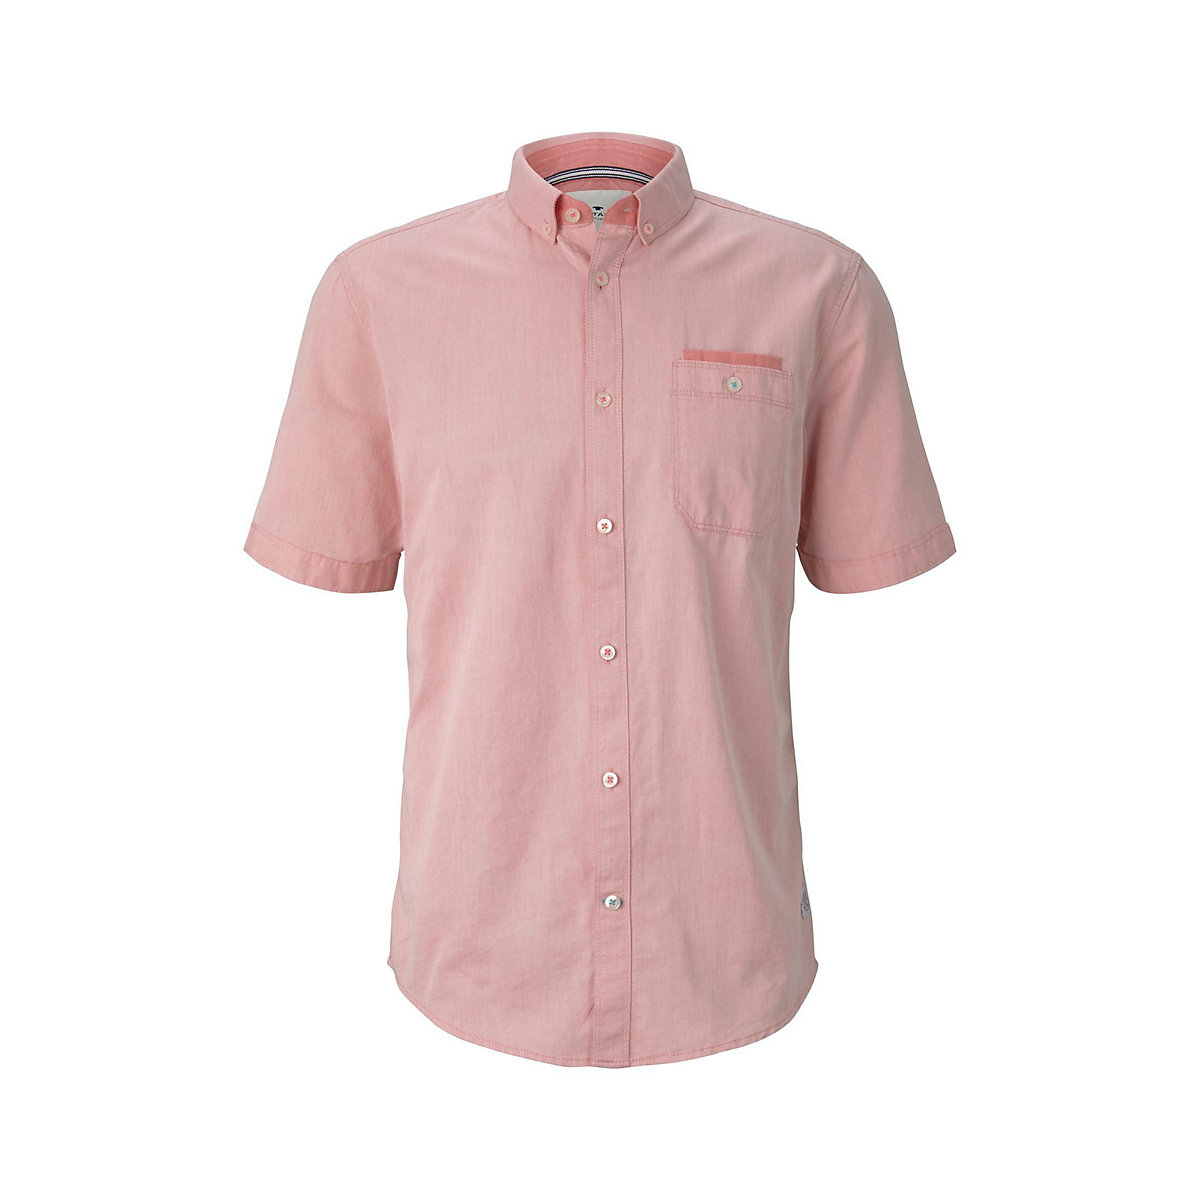 TOM TAILOR Blusen & Shirts Hemd in Twill-Optik Langarmhemden hellorange